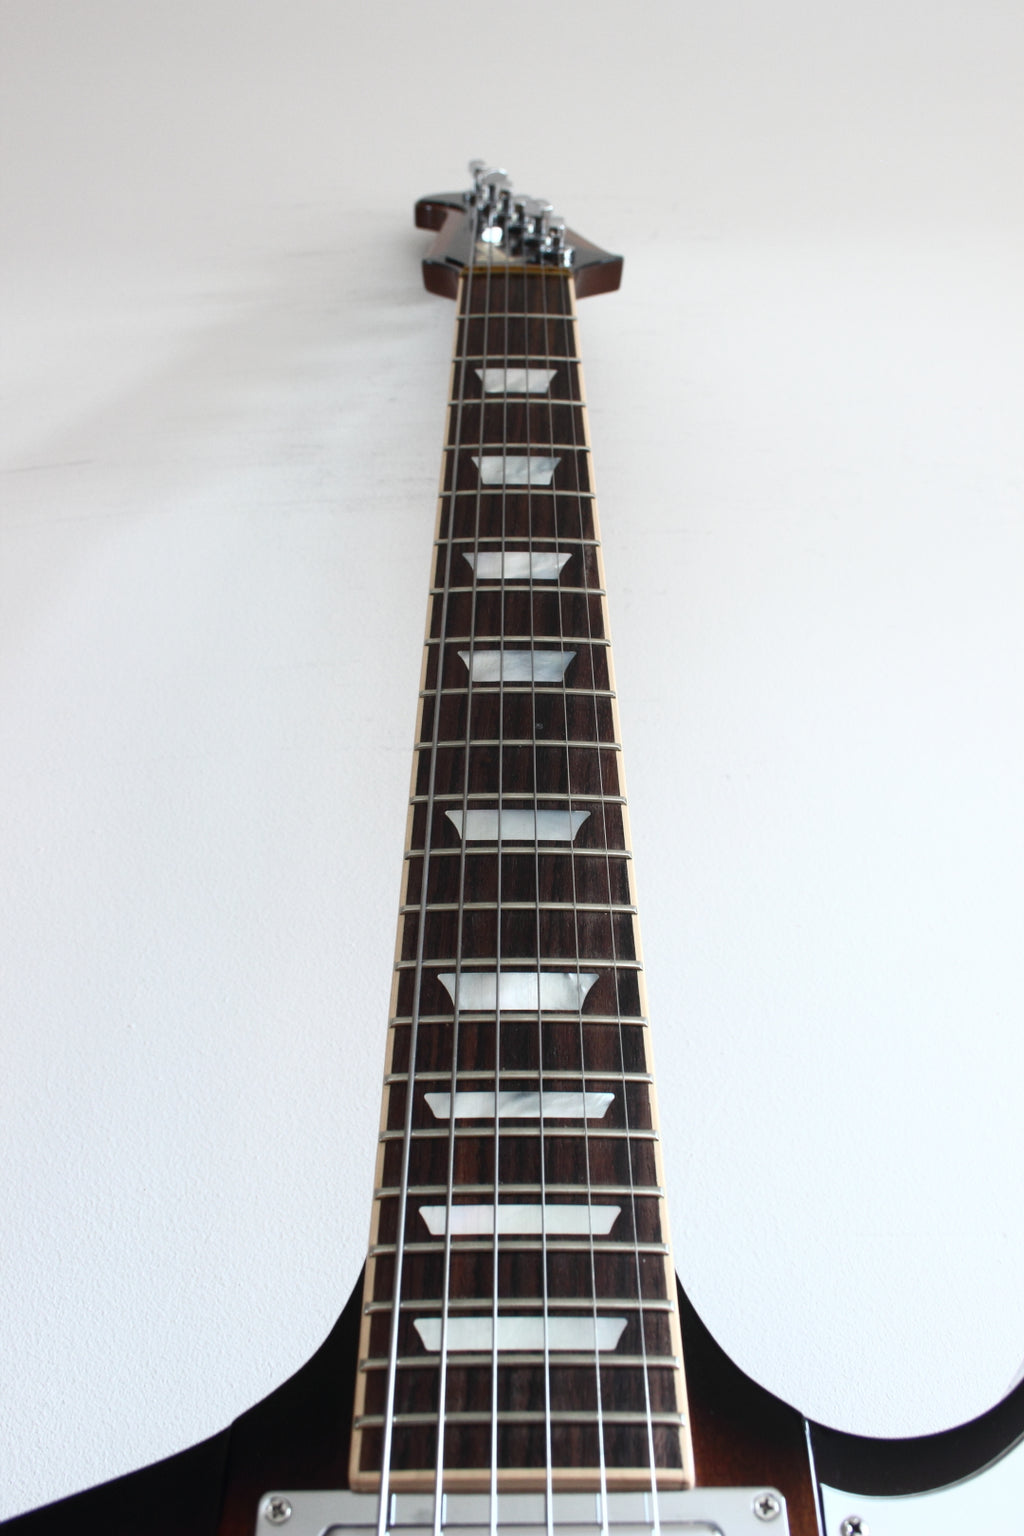 Gibson Firebird V Vintage Sunburst 2015